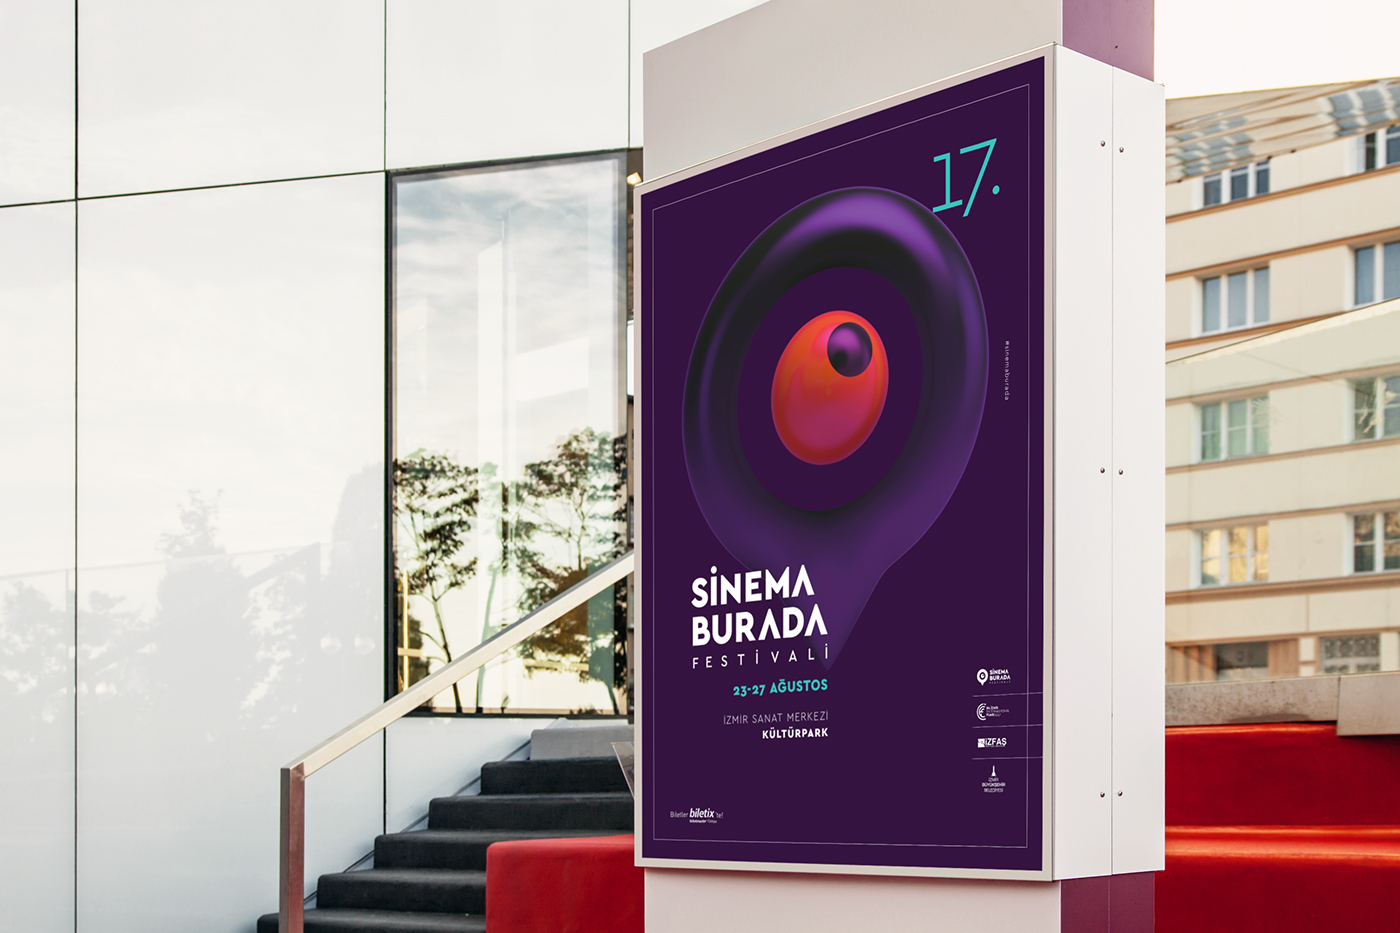 Sinema burada Cinema festival Event Design Cinema cinema brochure cinema booklet festival design Cinema poster cinema identity design